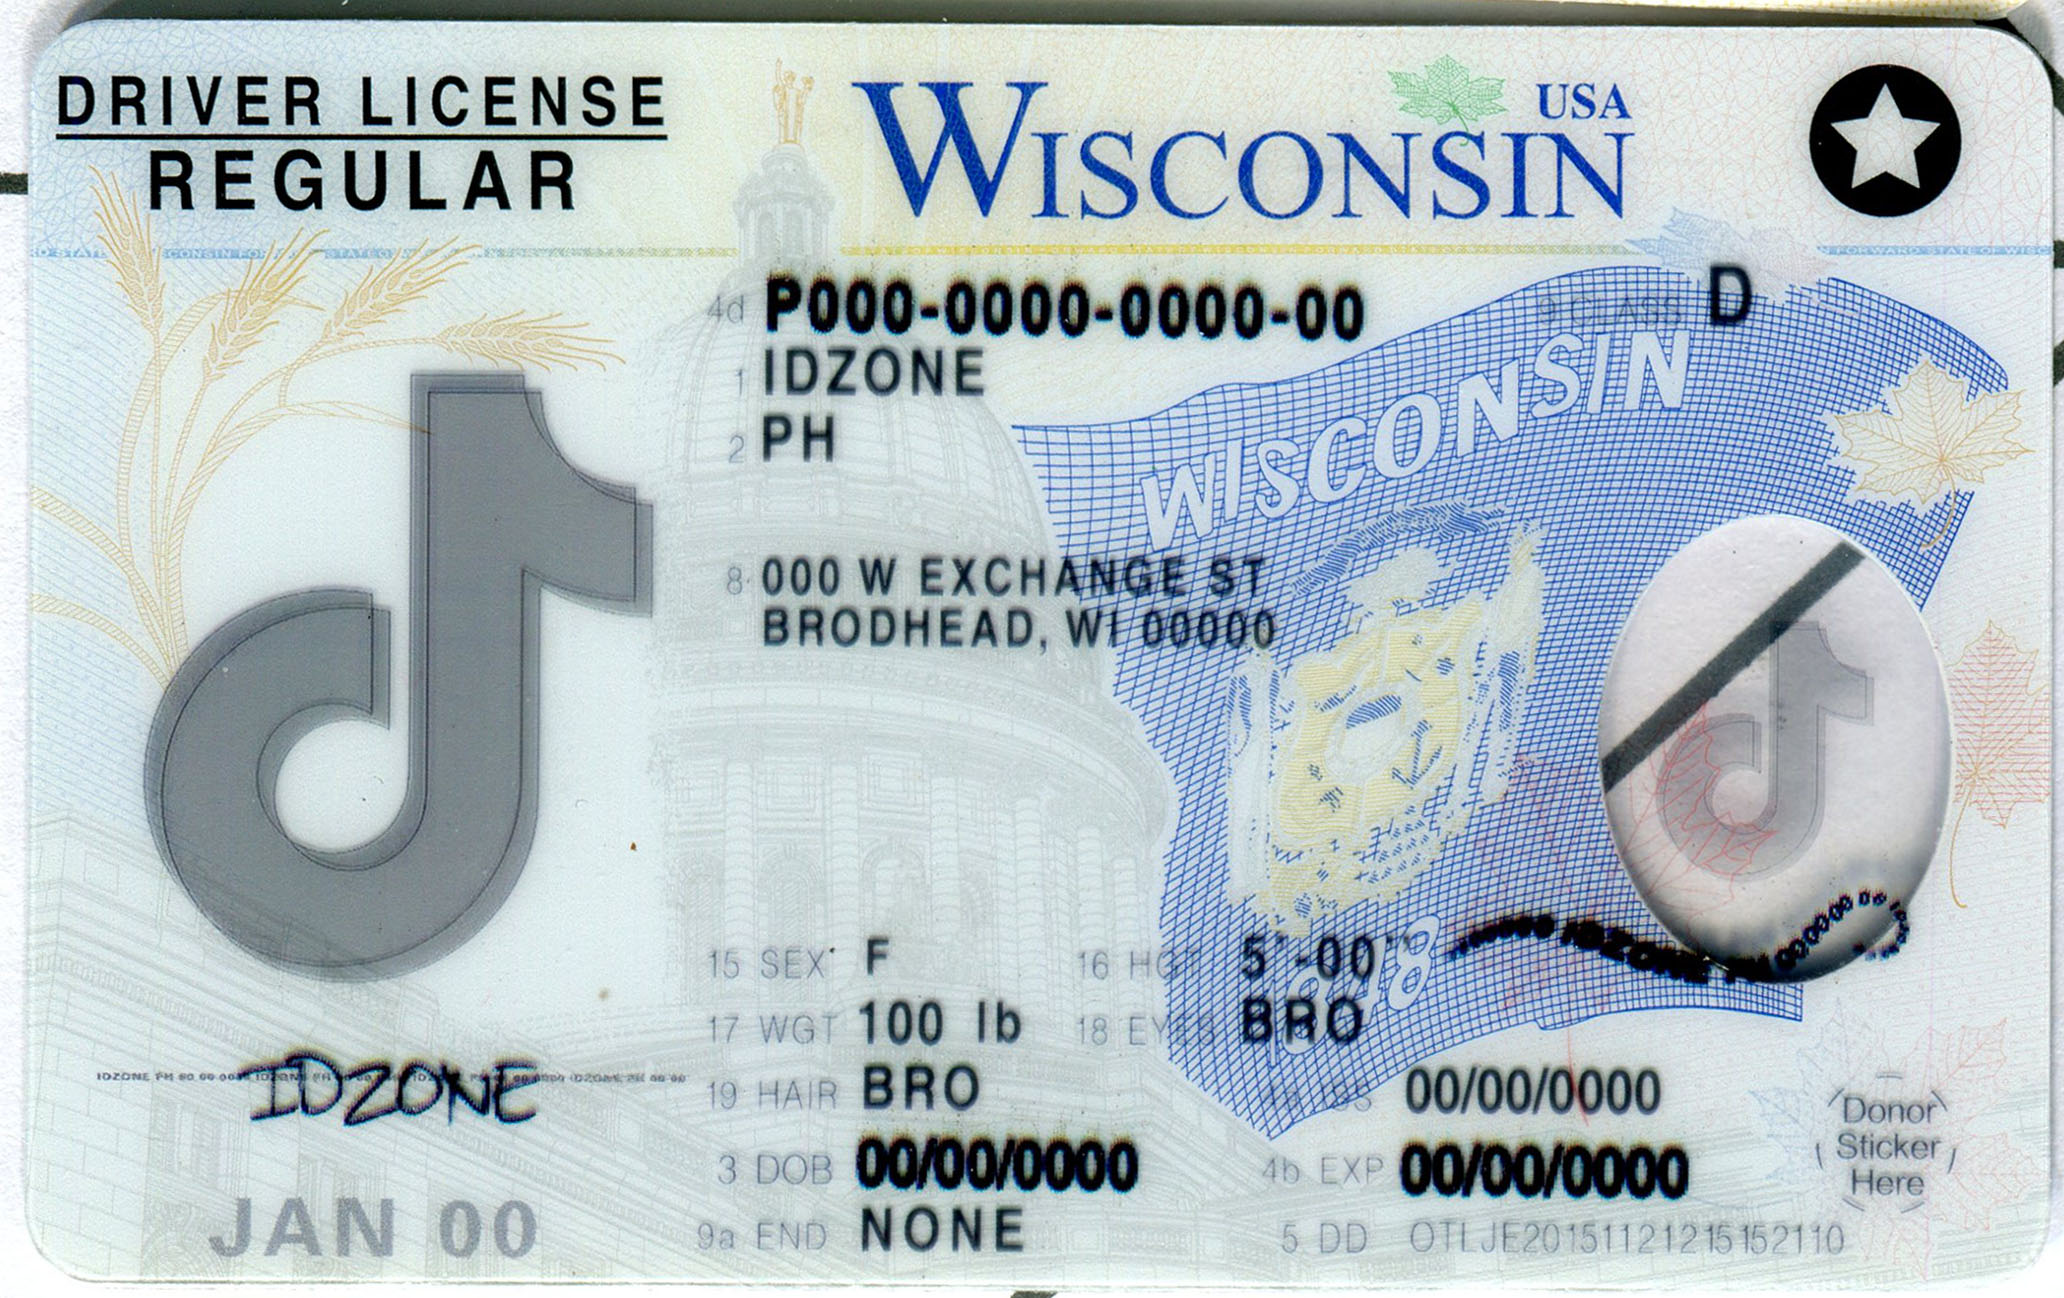 WISCONSIN-NEW buy fake id